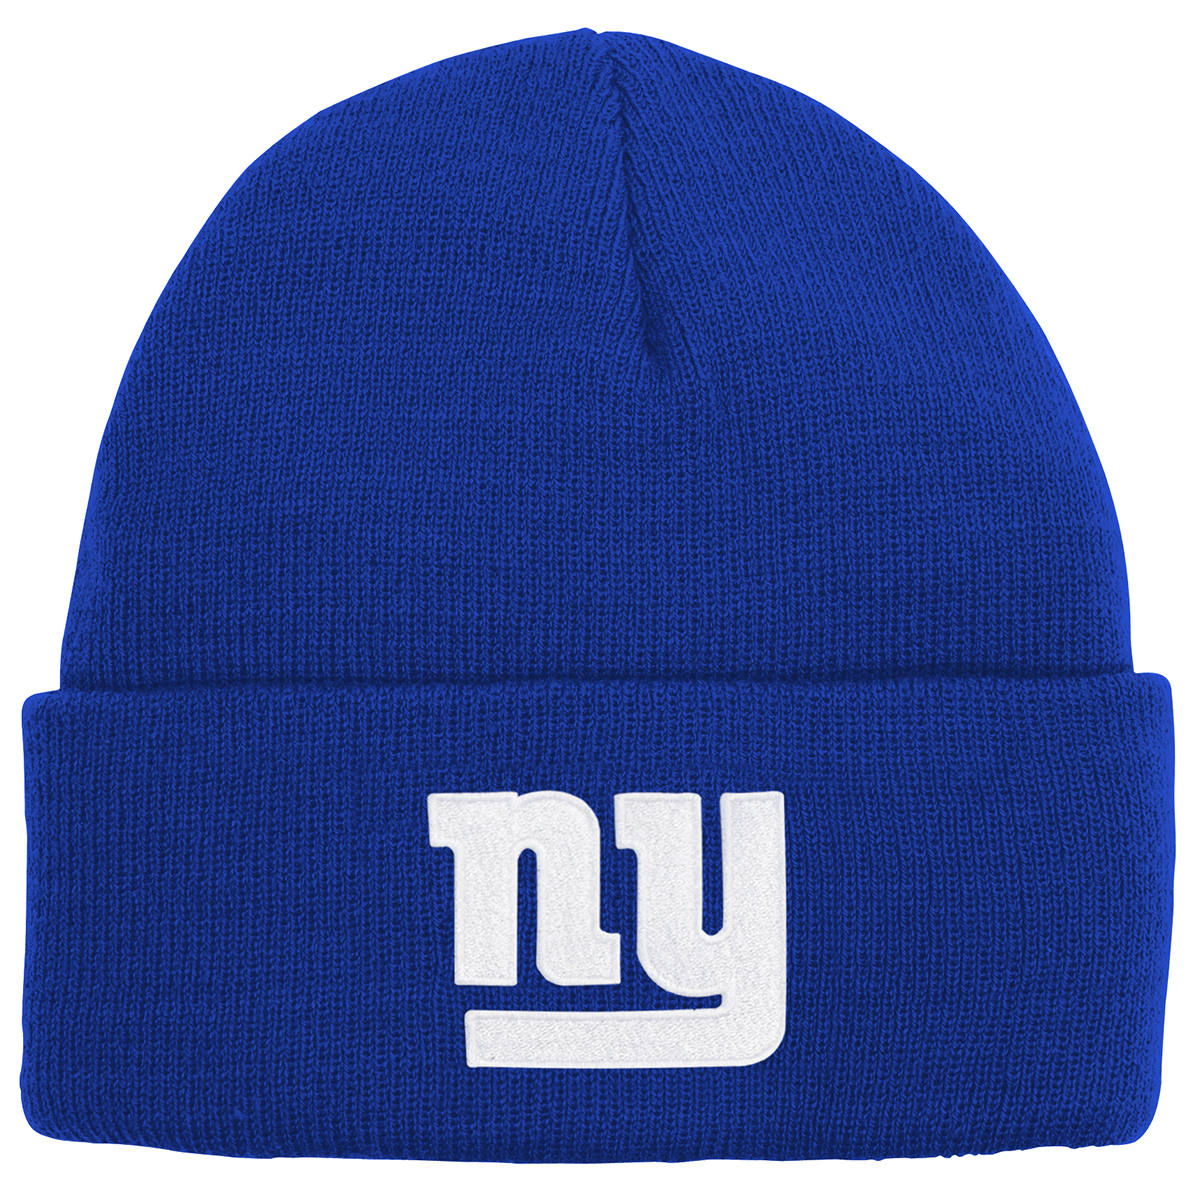 New York Giants Kids' Outerstuff Cuffed Knit Hat